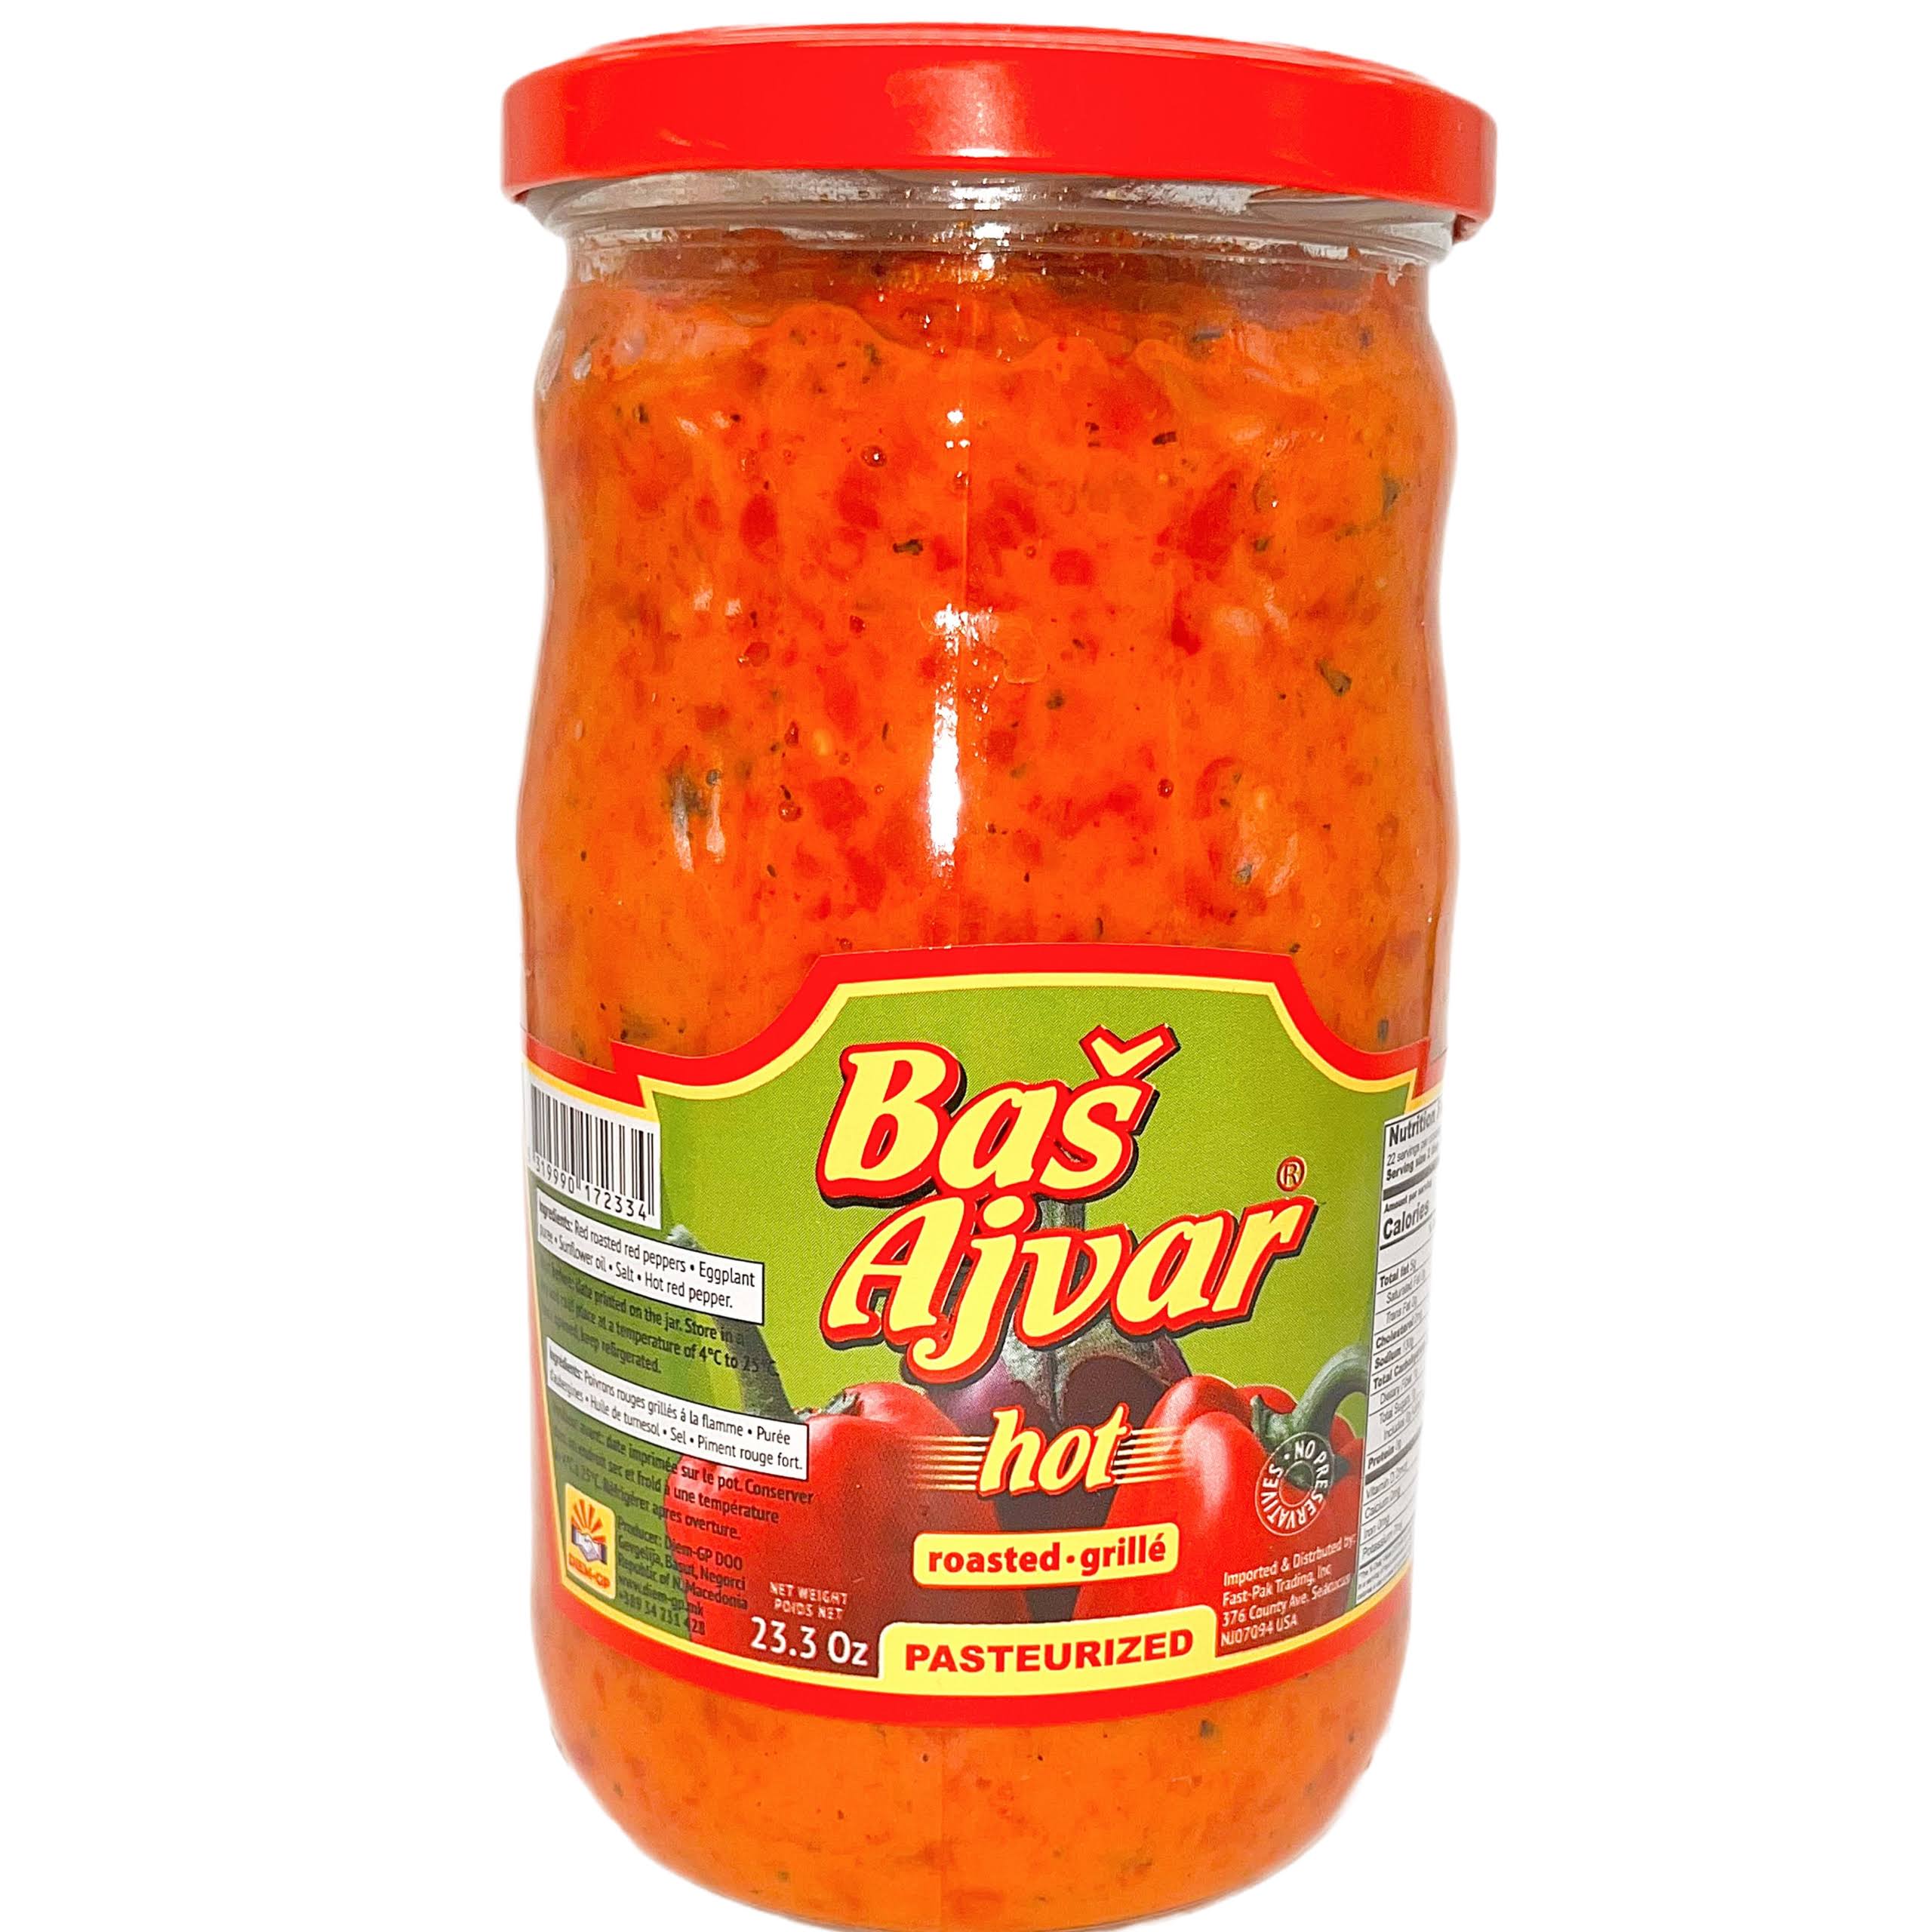 Bas Ajvar Homemade Hot Roasted Pepper and Eggplant Spread - 720ml